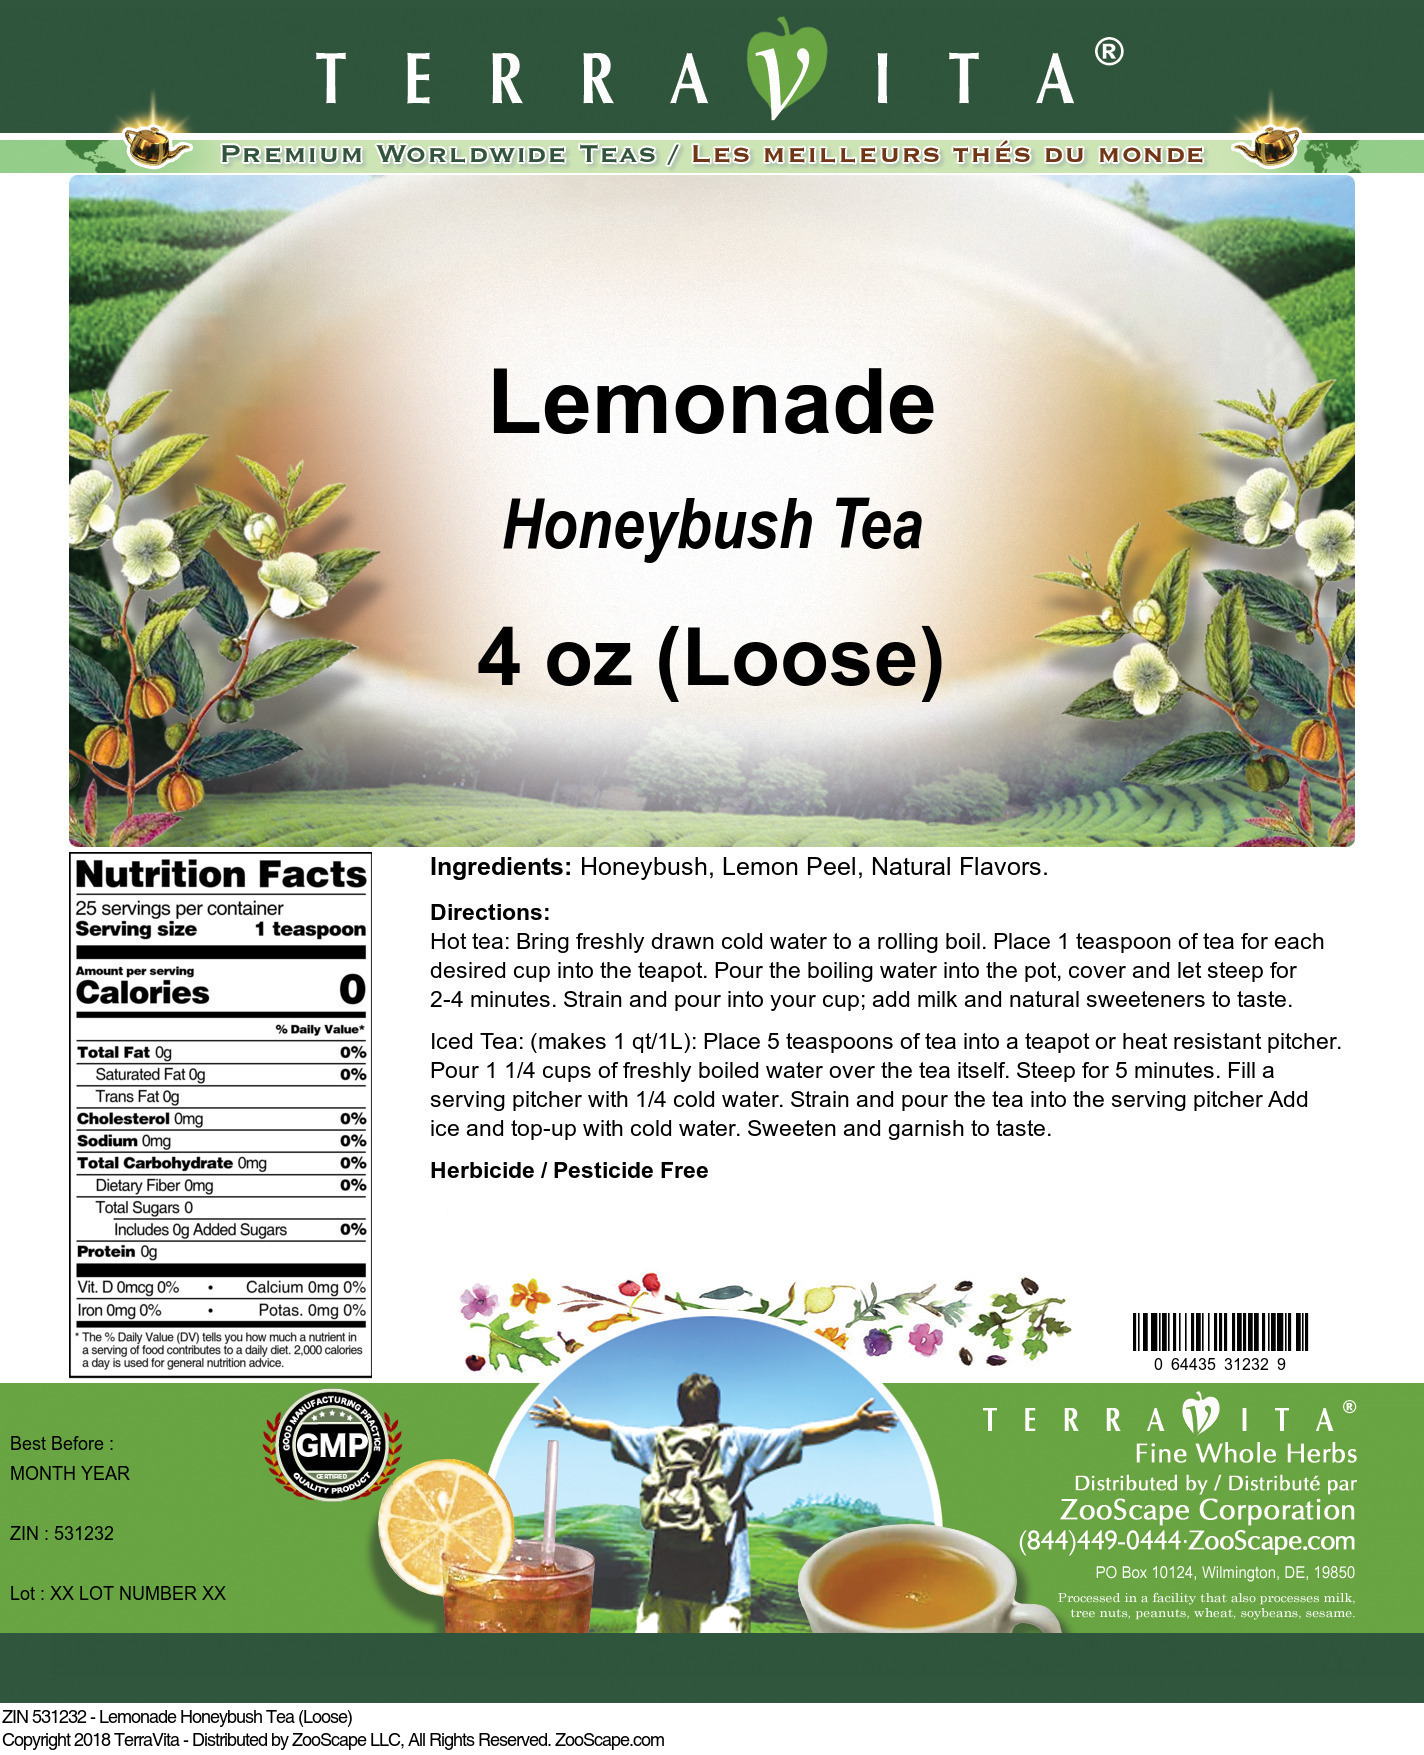 Lemonade Honeybush Tea (Loose) - Label